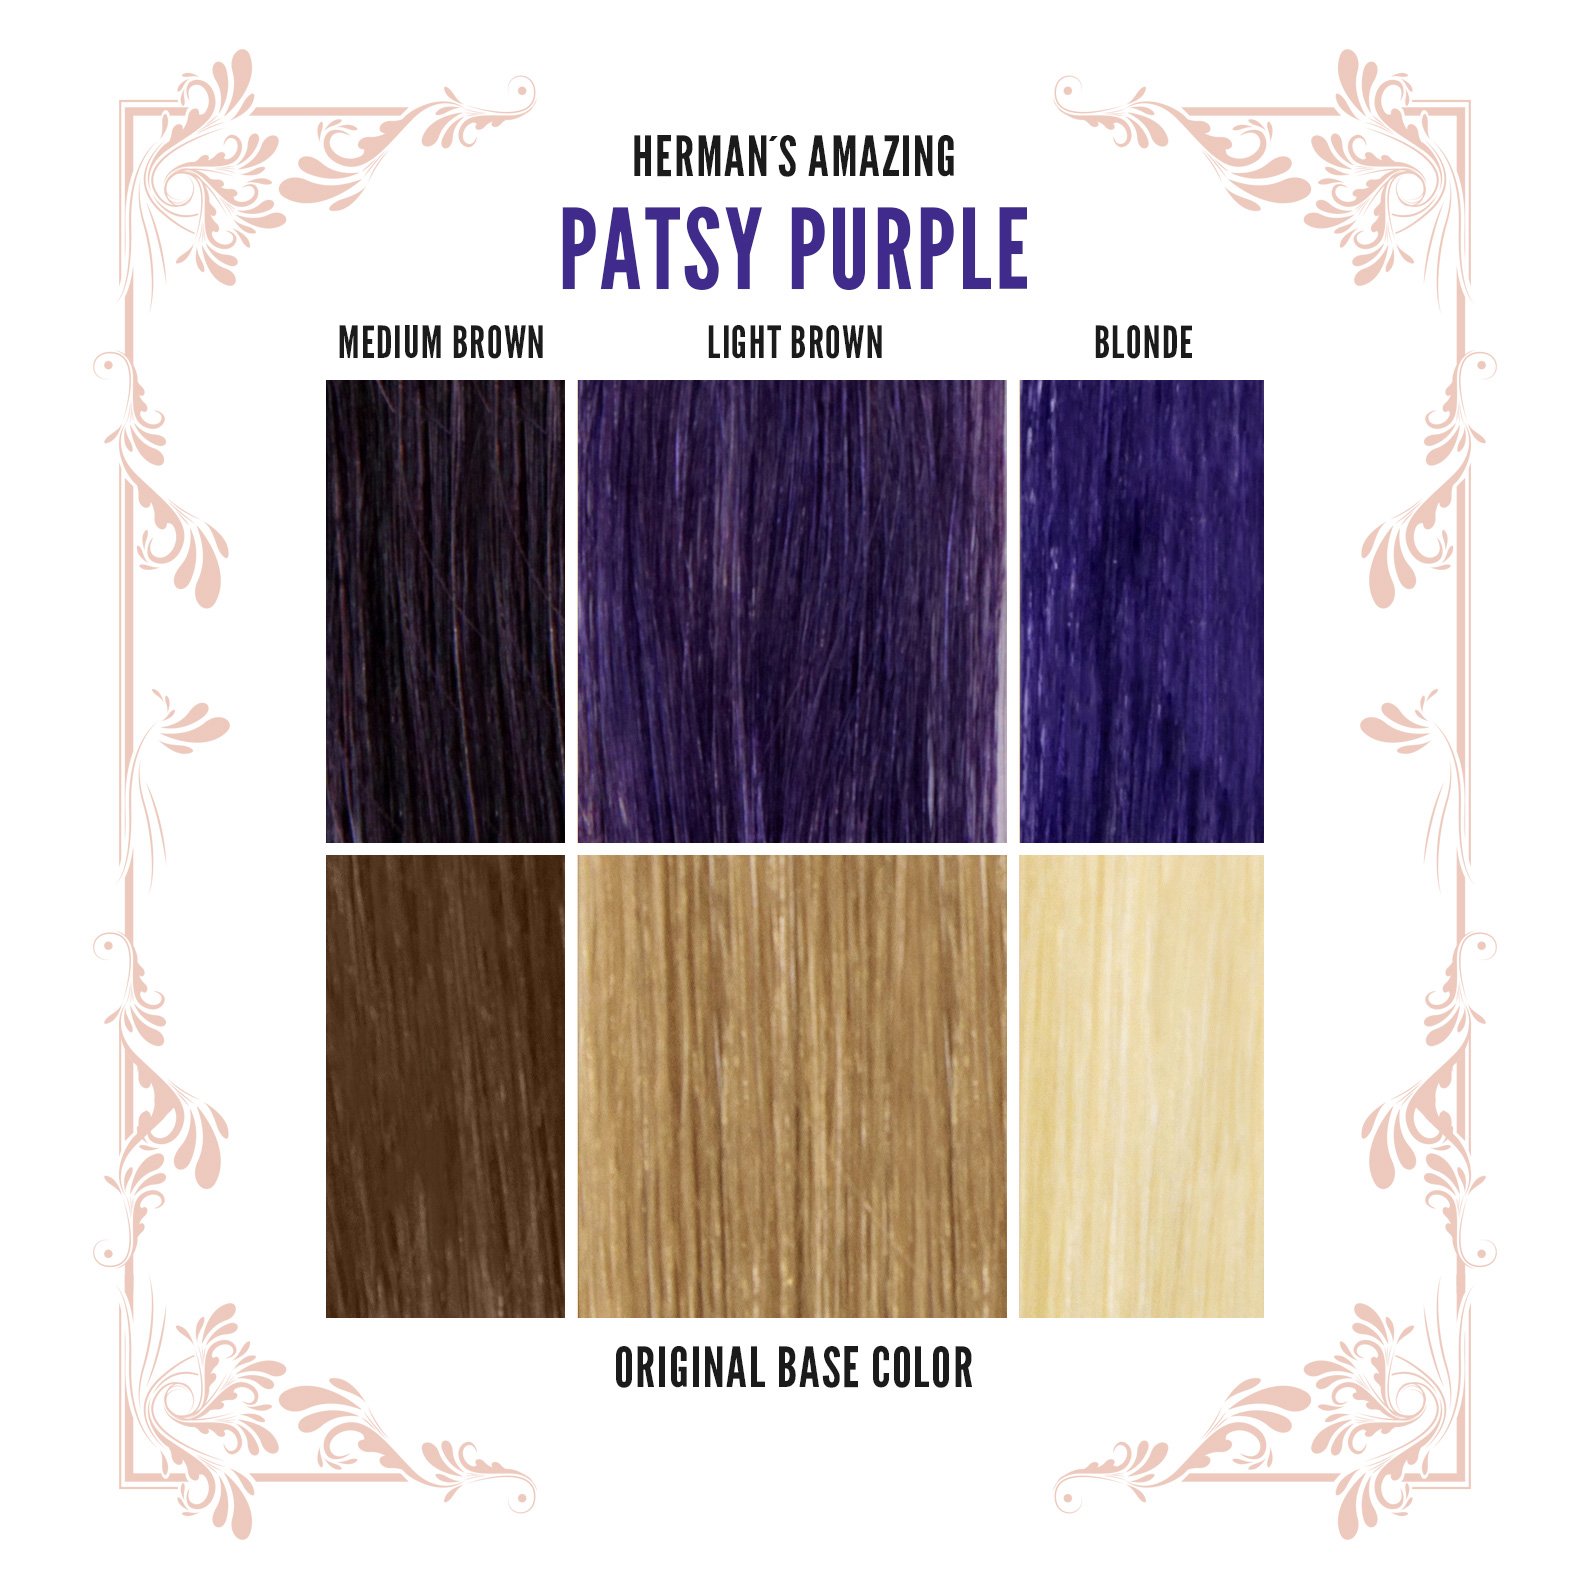 Herman 's Amazing - Patsy Purple